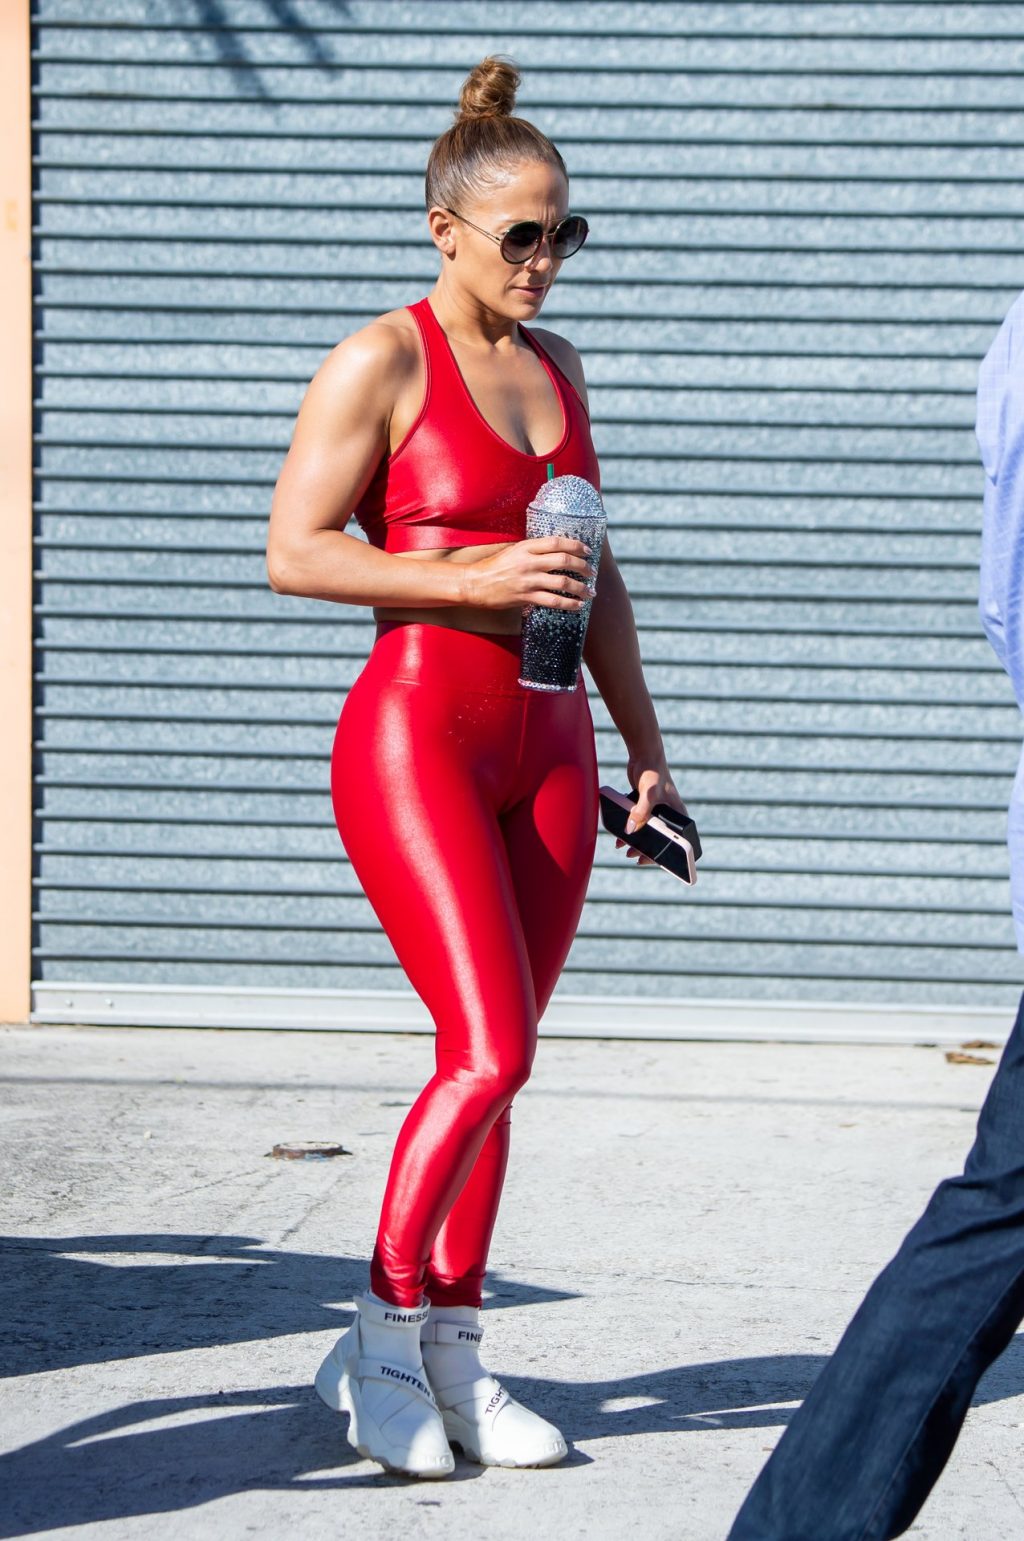 Workout Pants and Tight Camel Toe Paparazzi Pics of Jennifer Lopez celebmasta.com 49